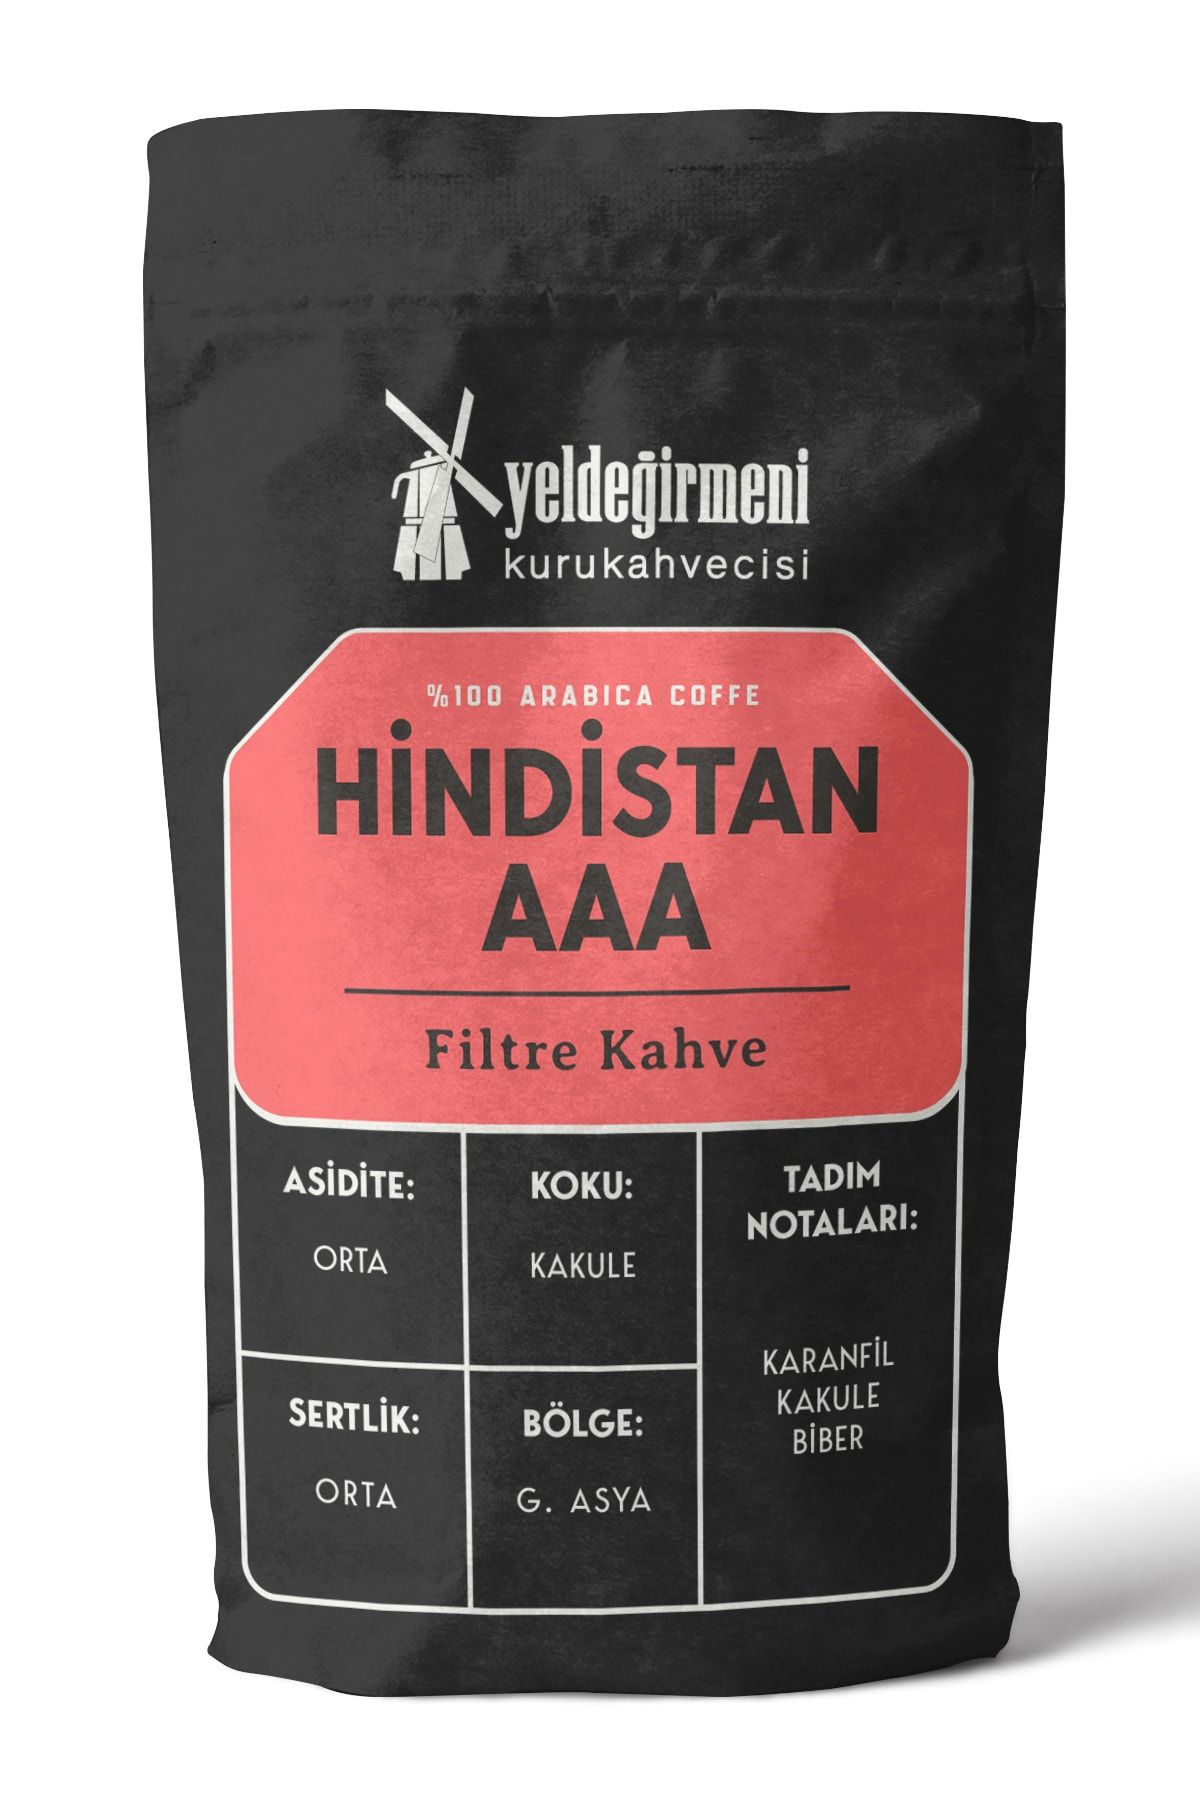 Yeldeğirmeni Kurukahvecisi Hindistan Aaa Filtre Kahve 250 gr